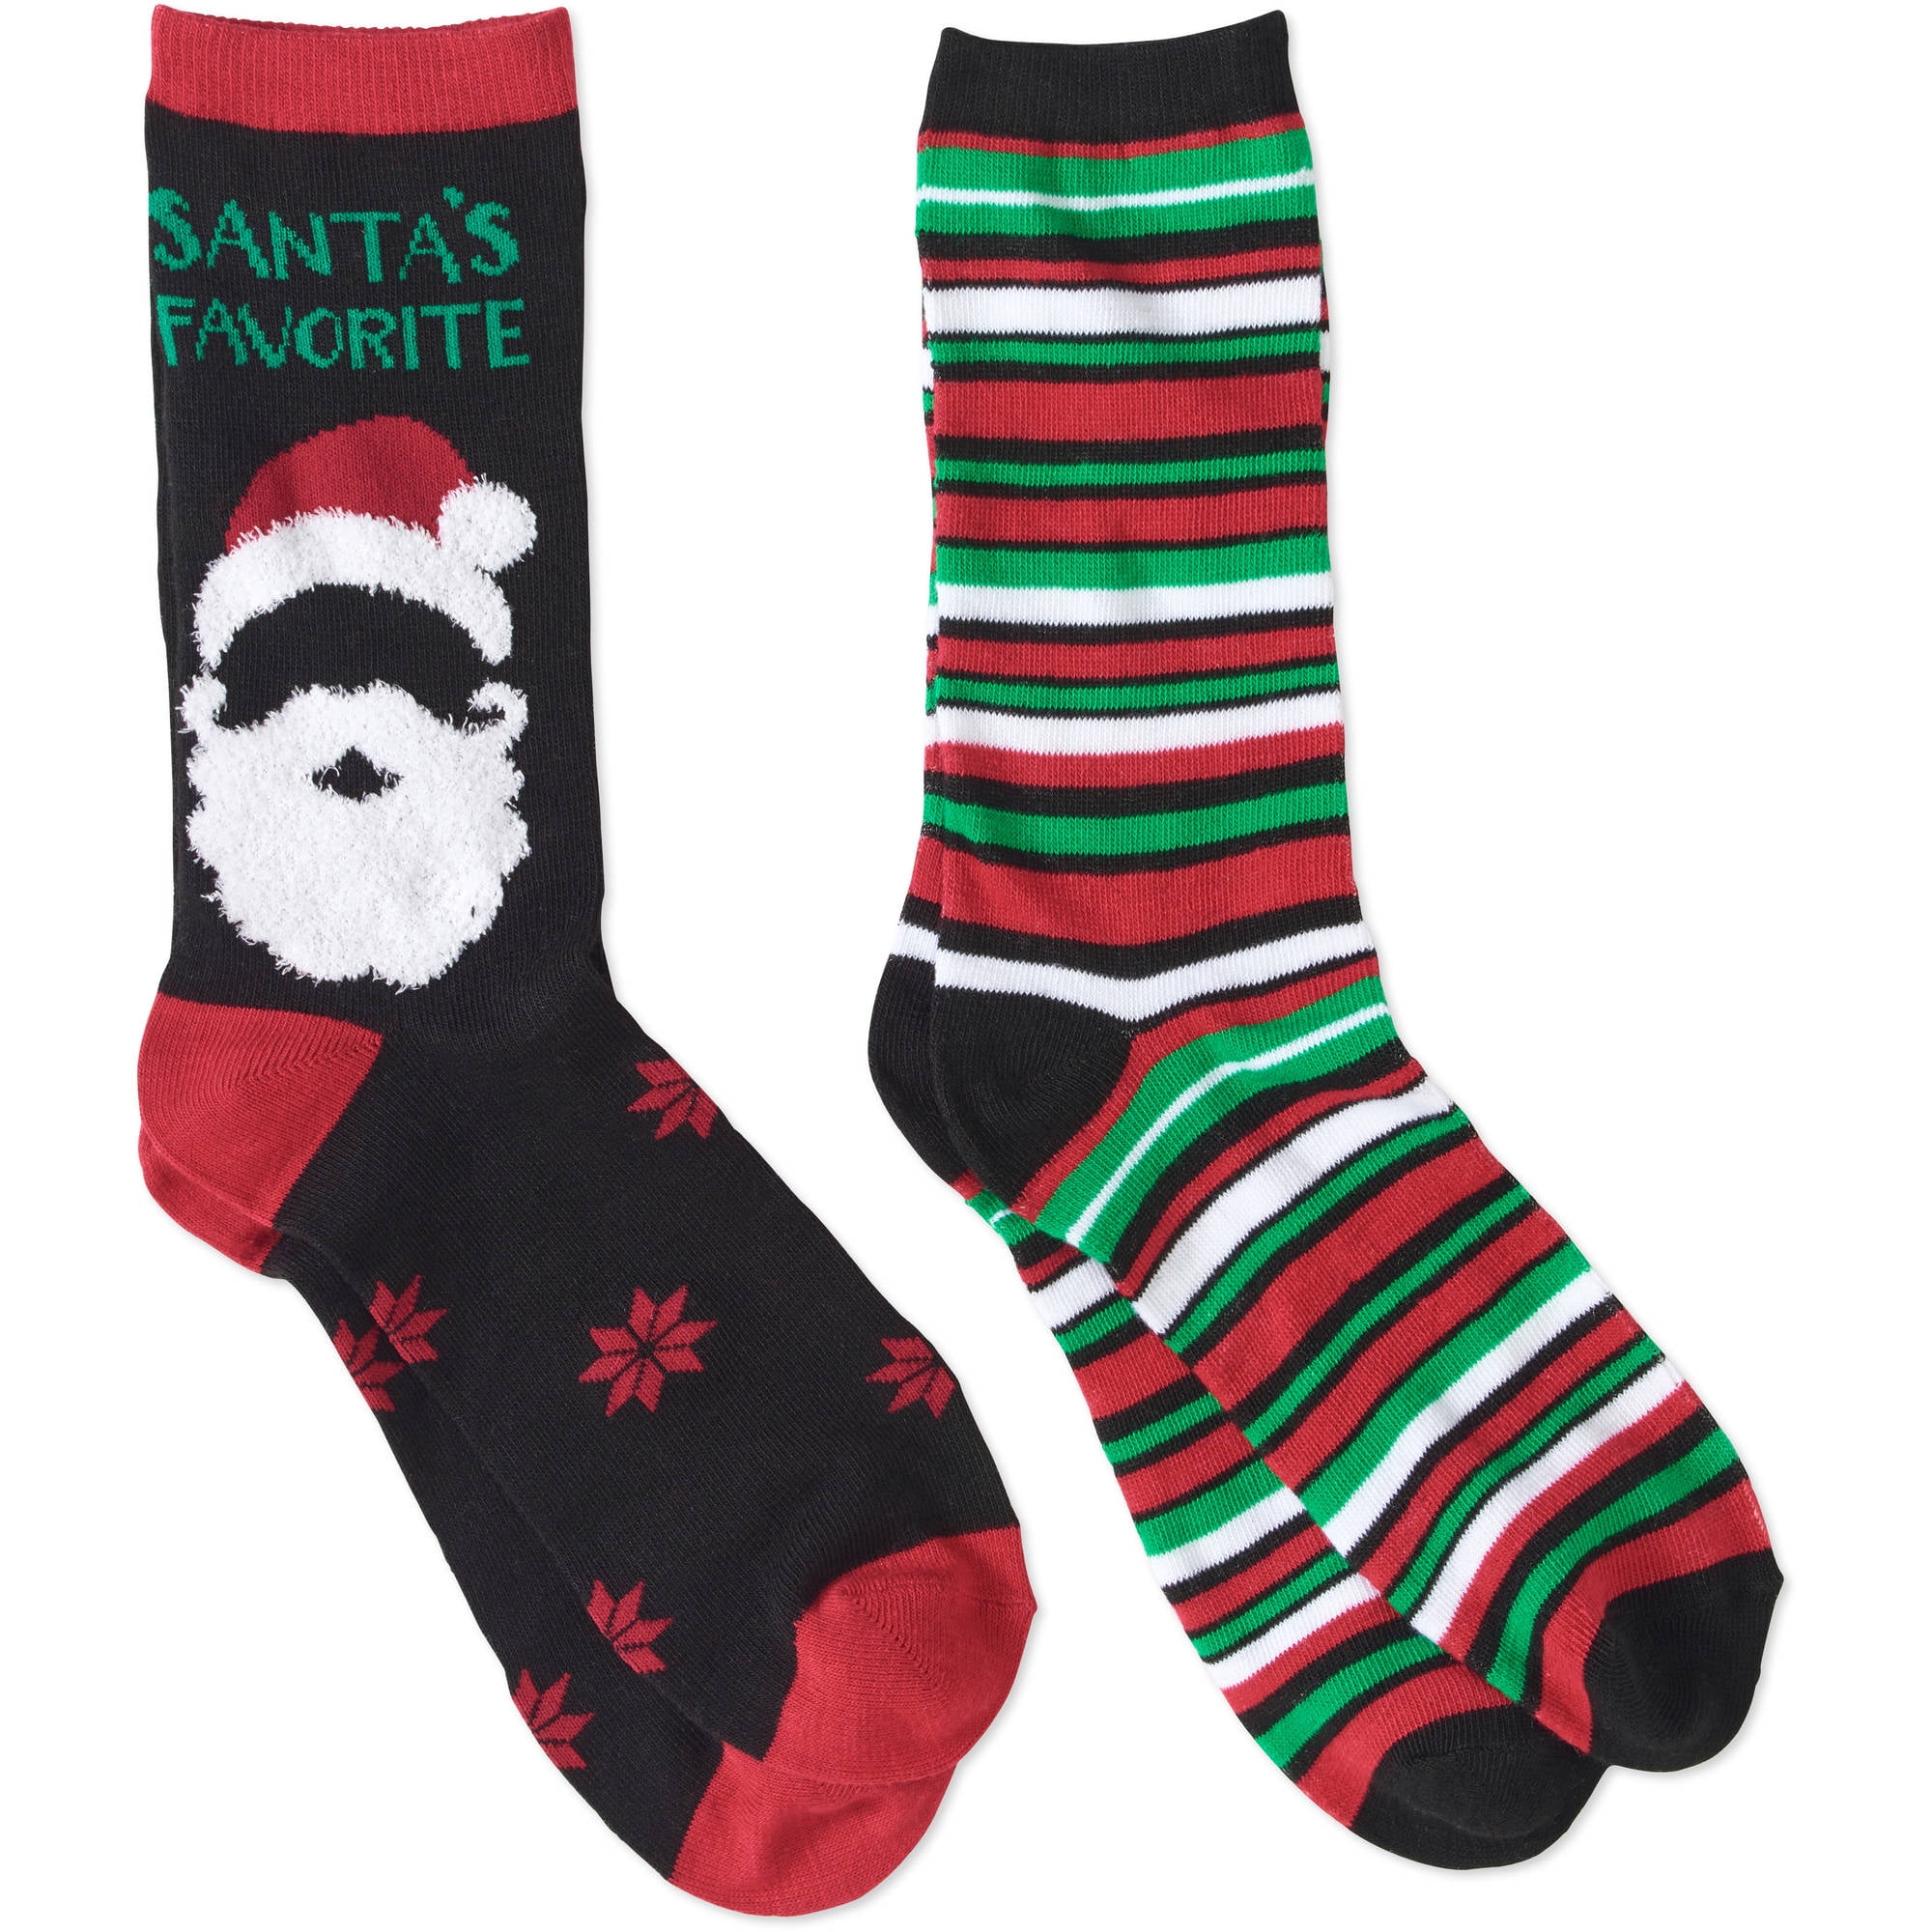 Christmas - Christmas Socks 2 Pack - Walmart.com - Walmart.com